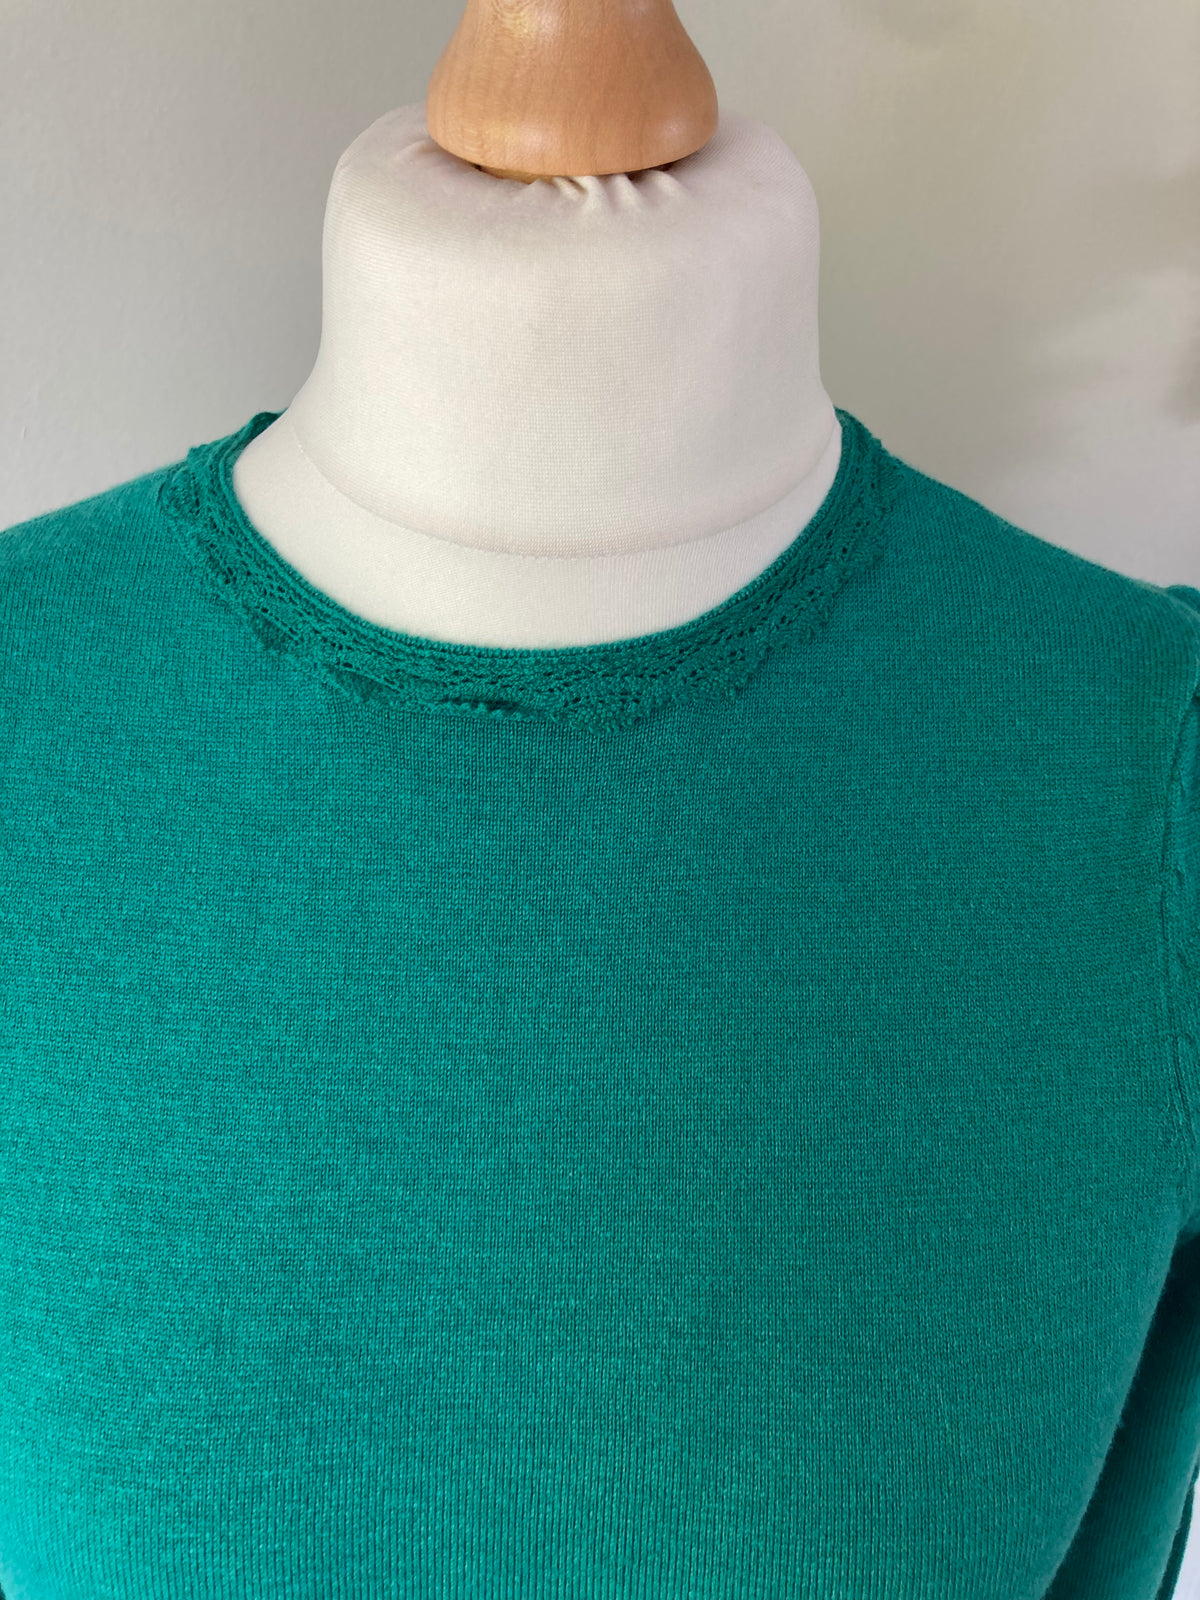 Green lace collard jumper by TESINI - Size 12